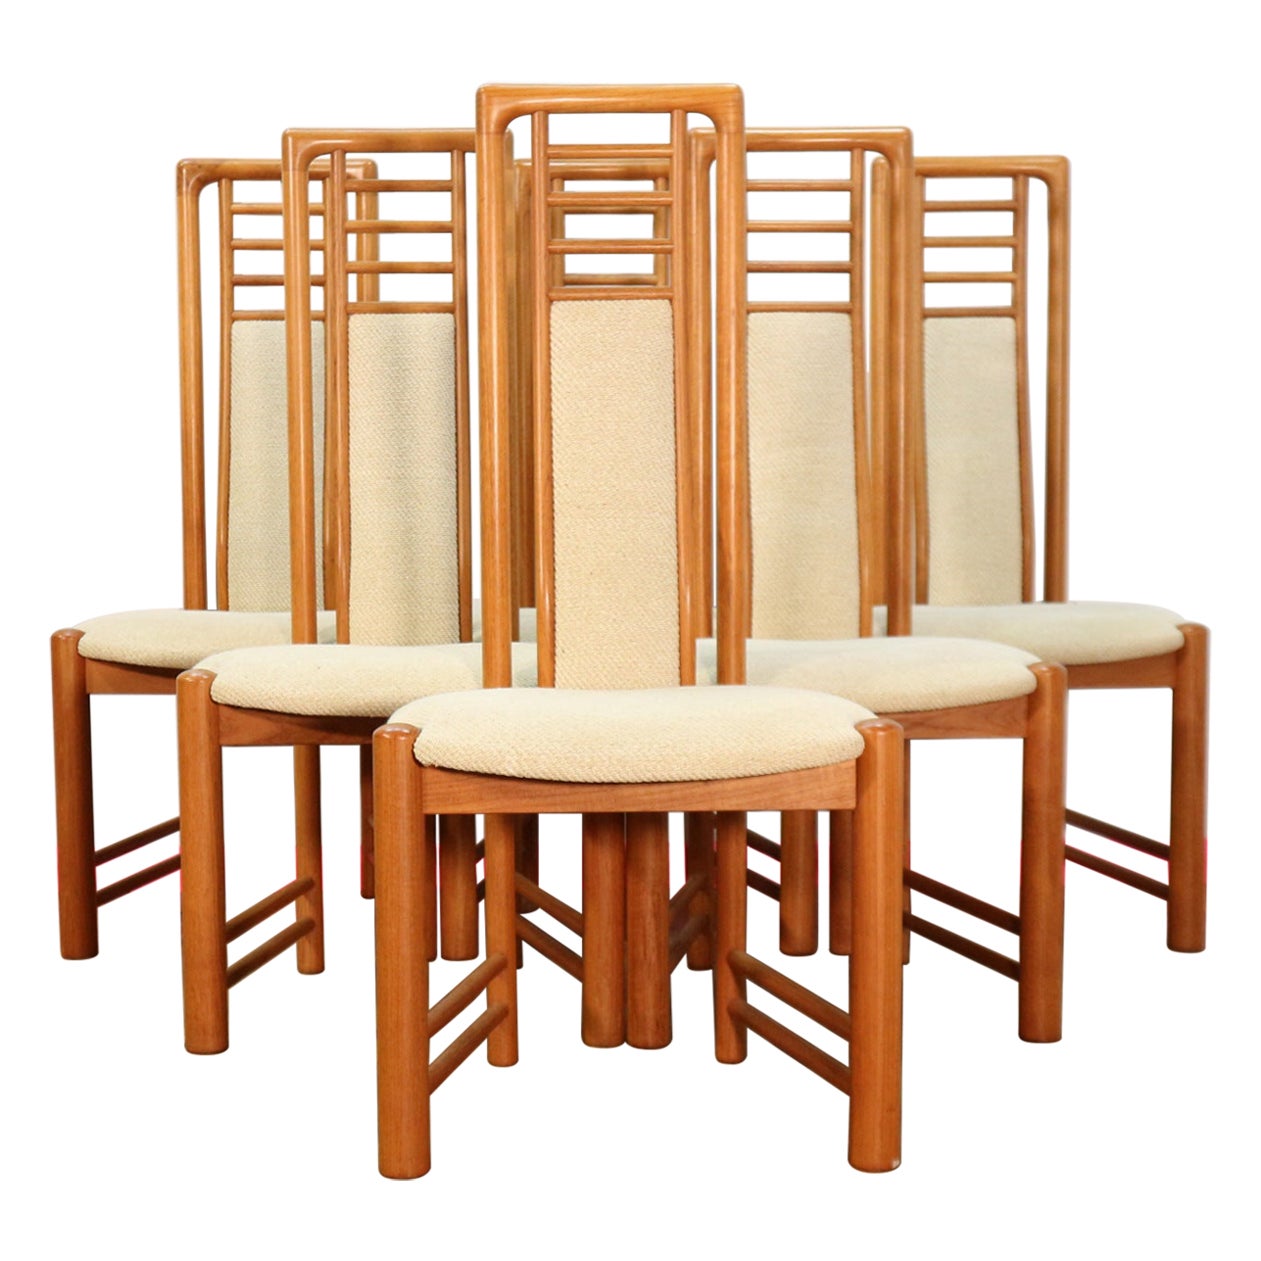 Mid-Century Modern Danish Tall Dining Chairs by Gudme Mobelfabrik Set of 6